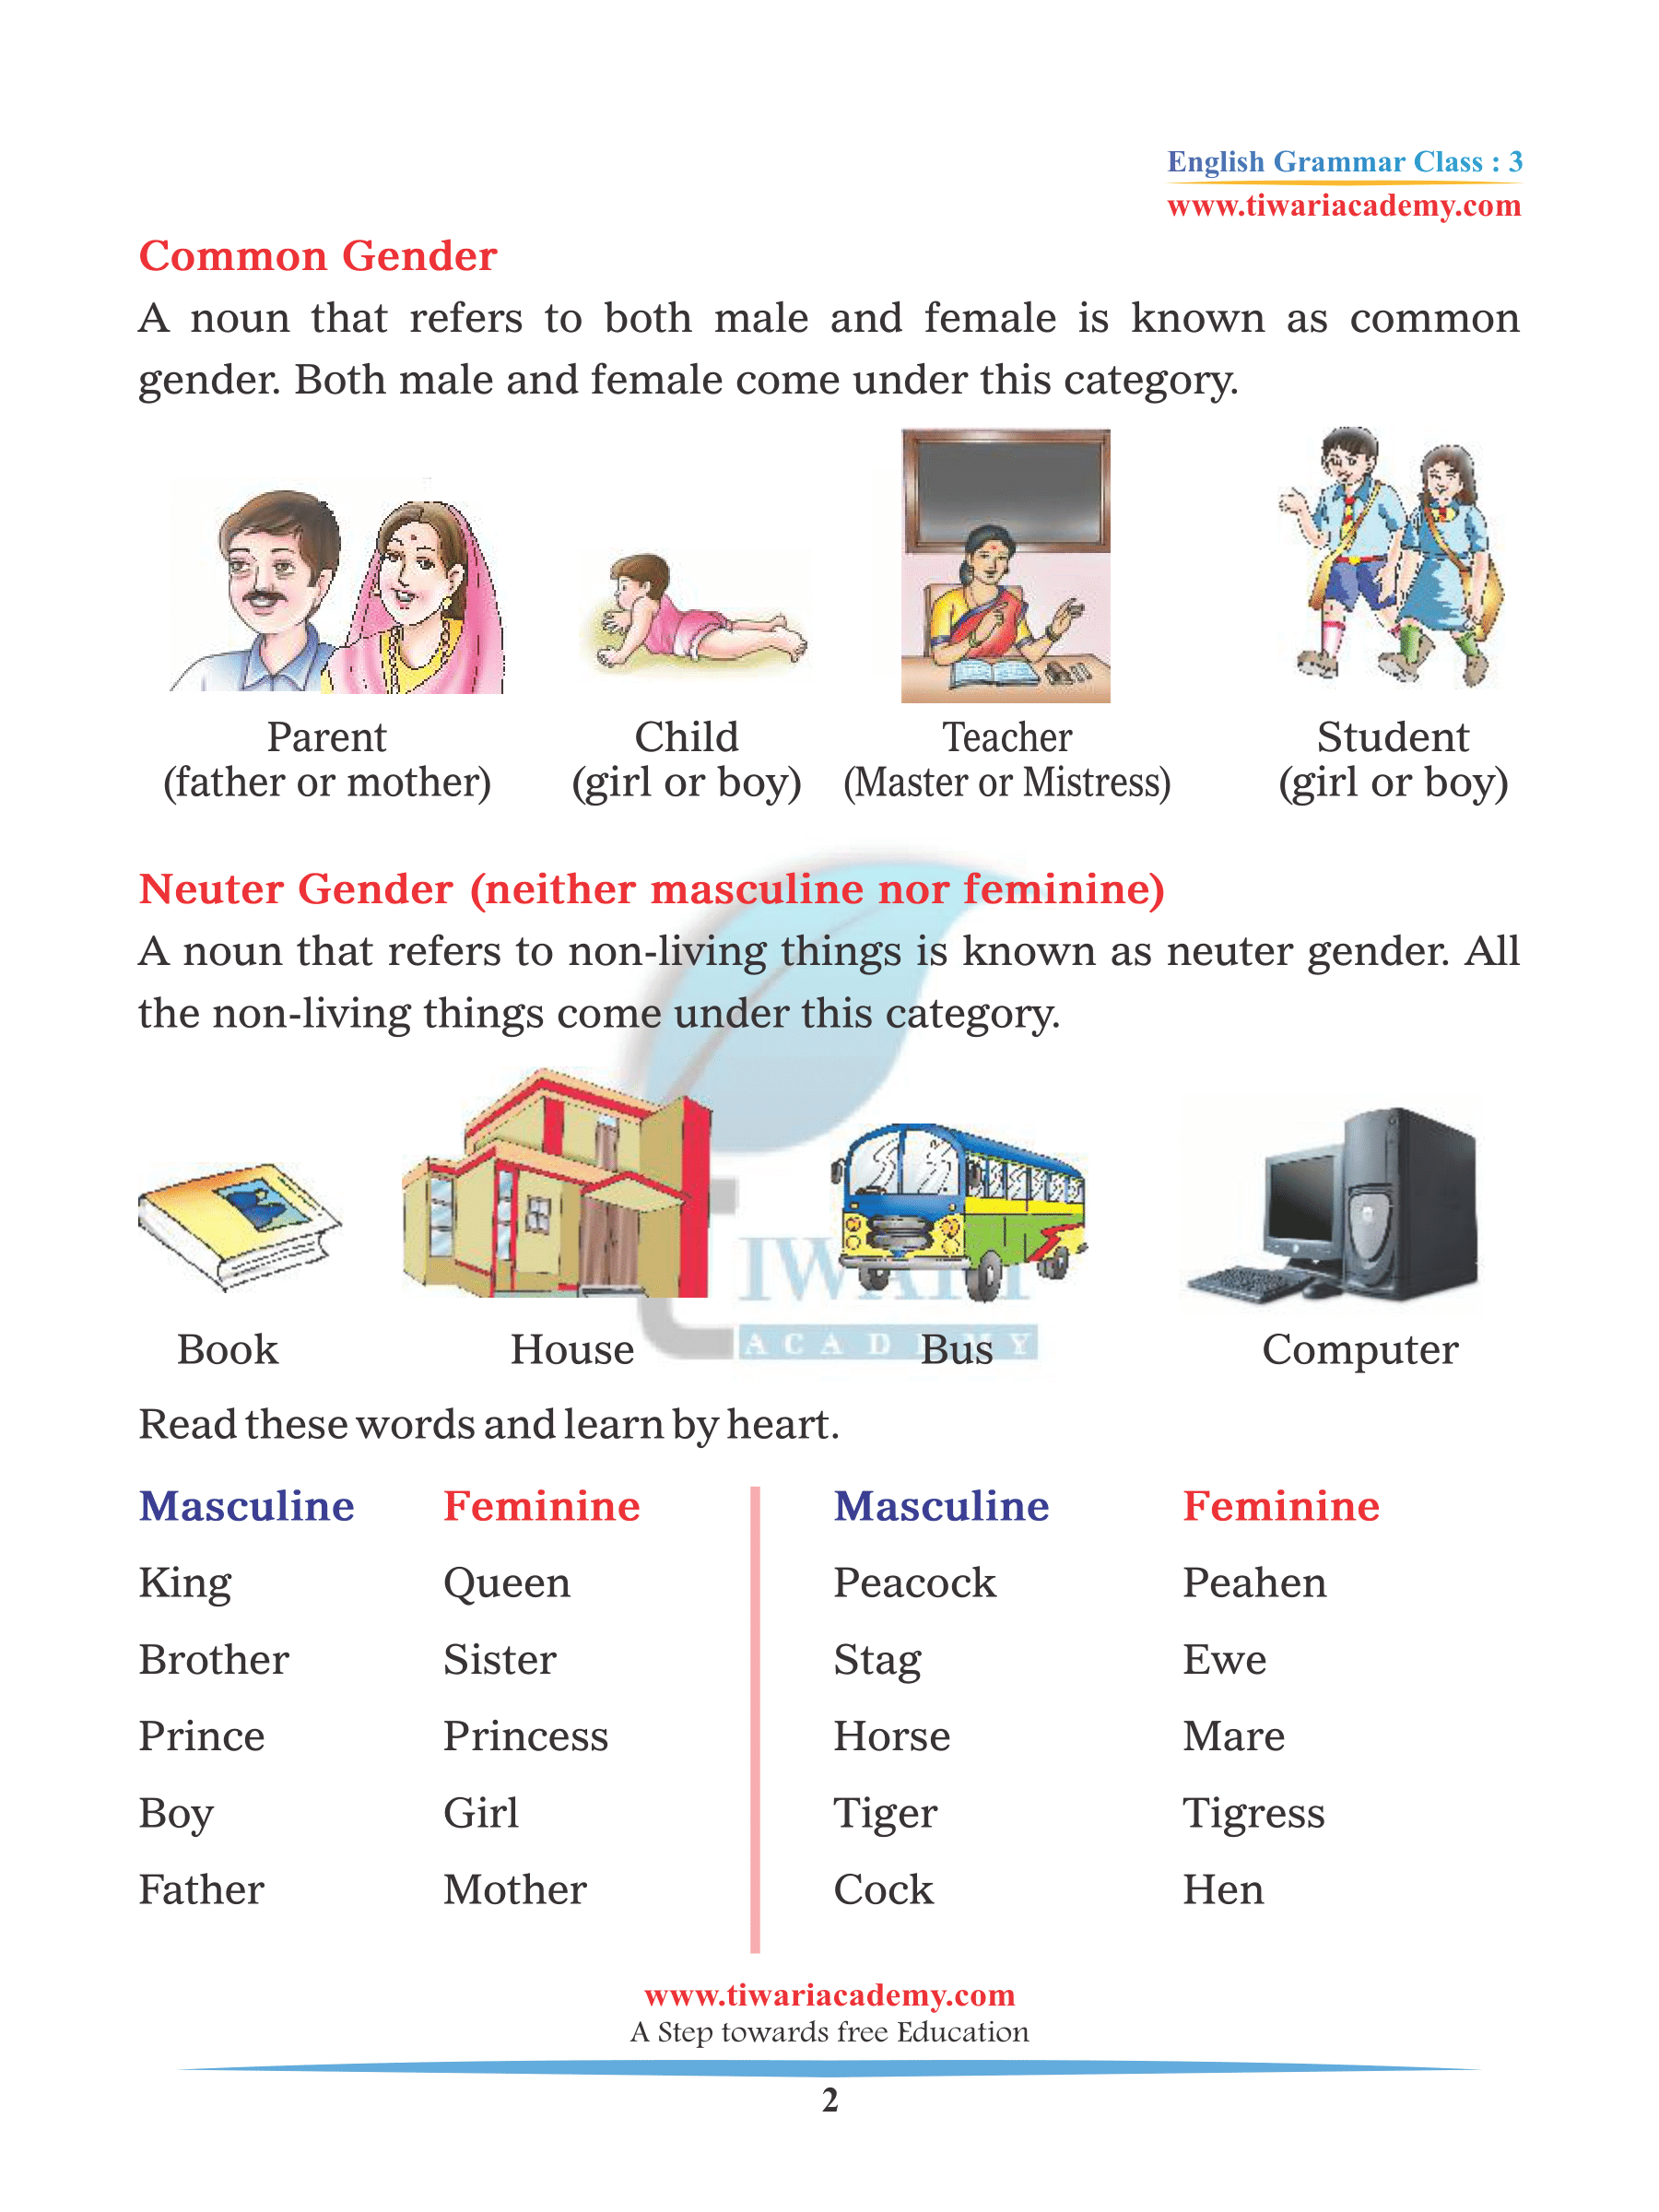 nouns-gender-gender-in-english-nouns-basic-english-for-kids